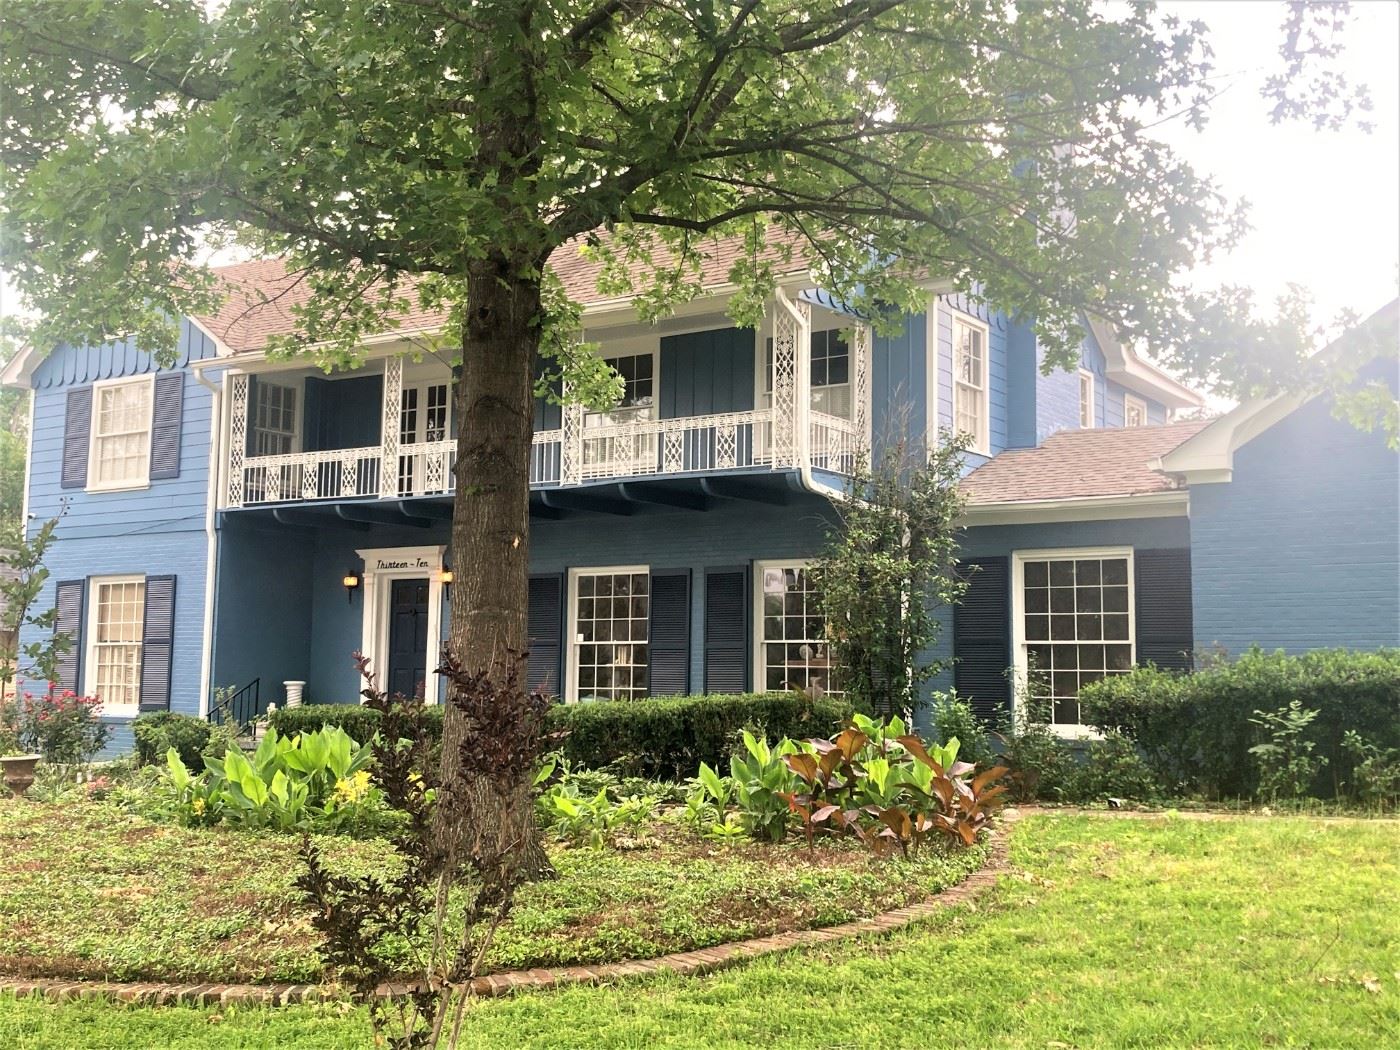 This Azalea District historic home is the location of the John L. Whitehead & Joan C. Bennett estate sale June 1,2,3.